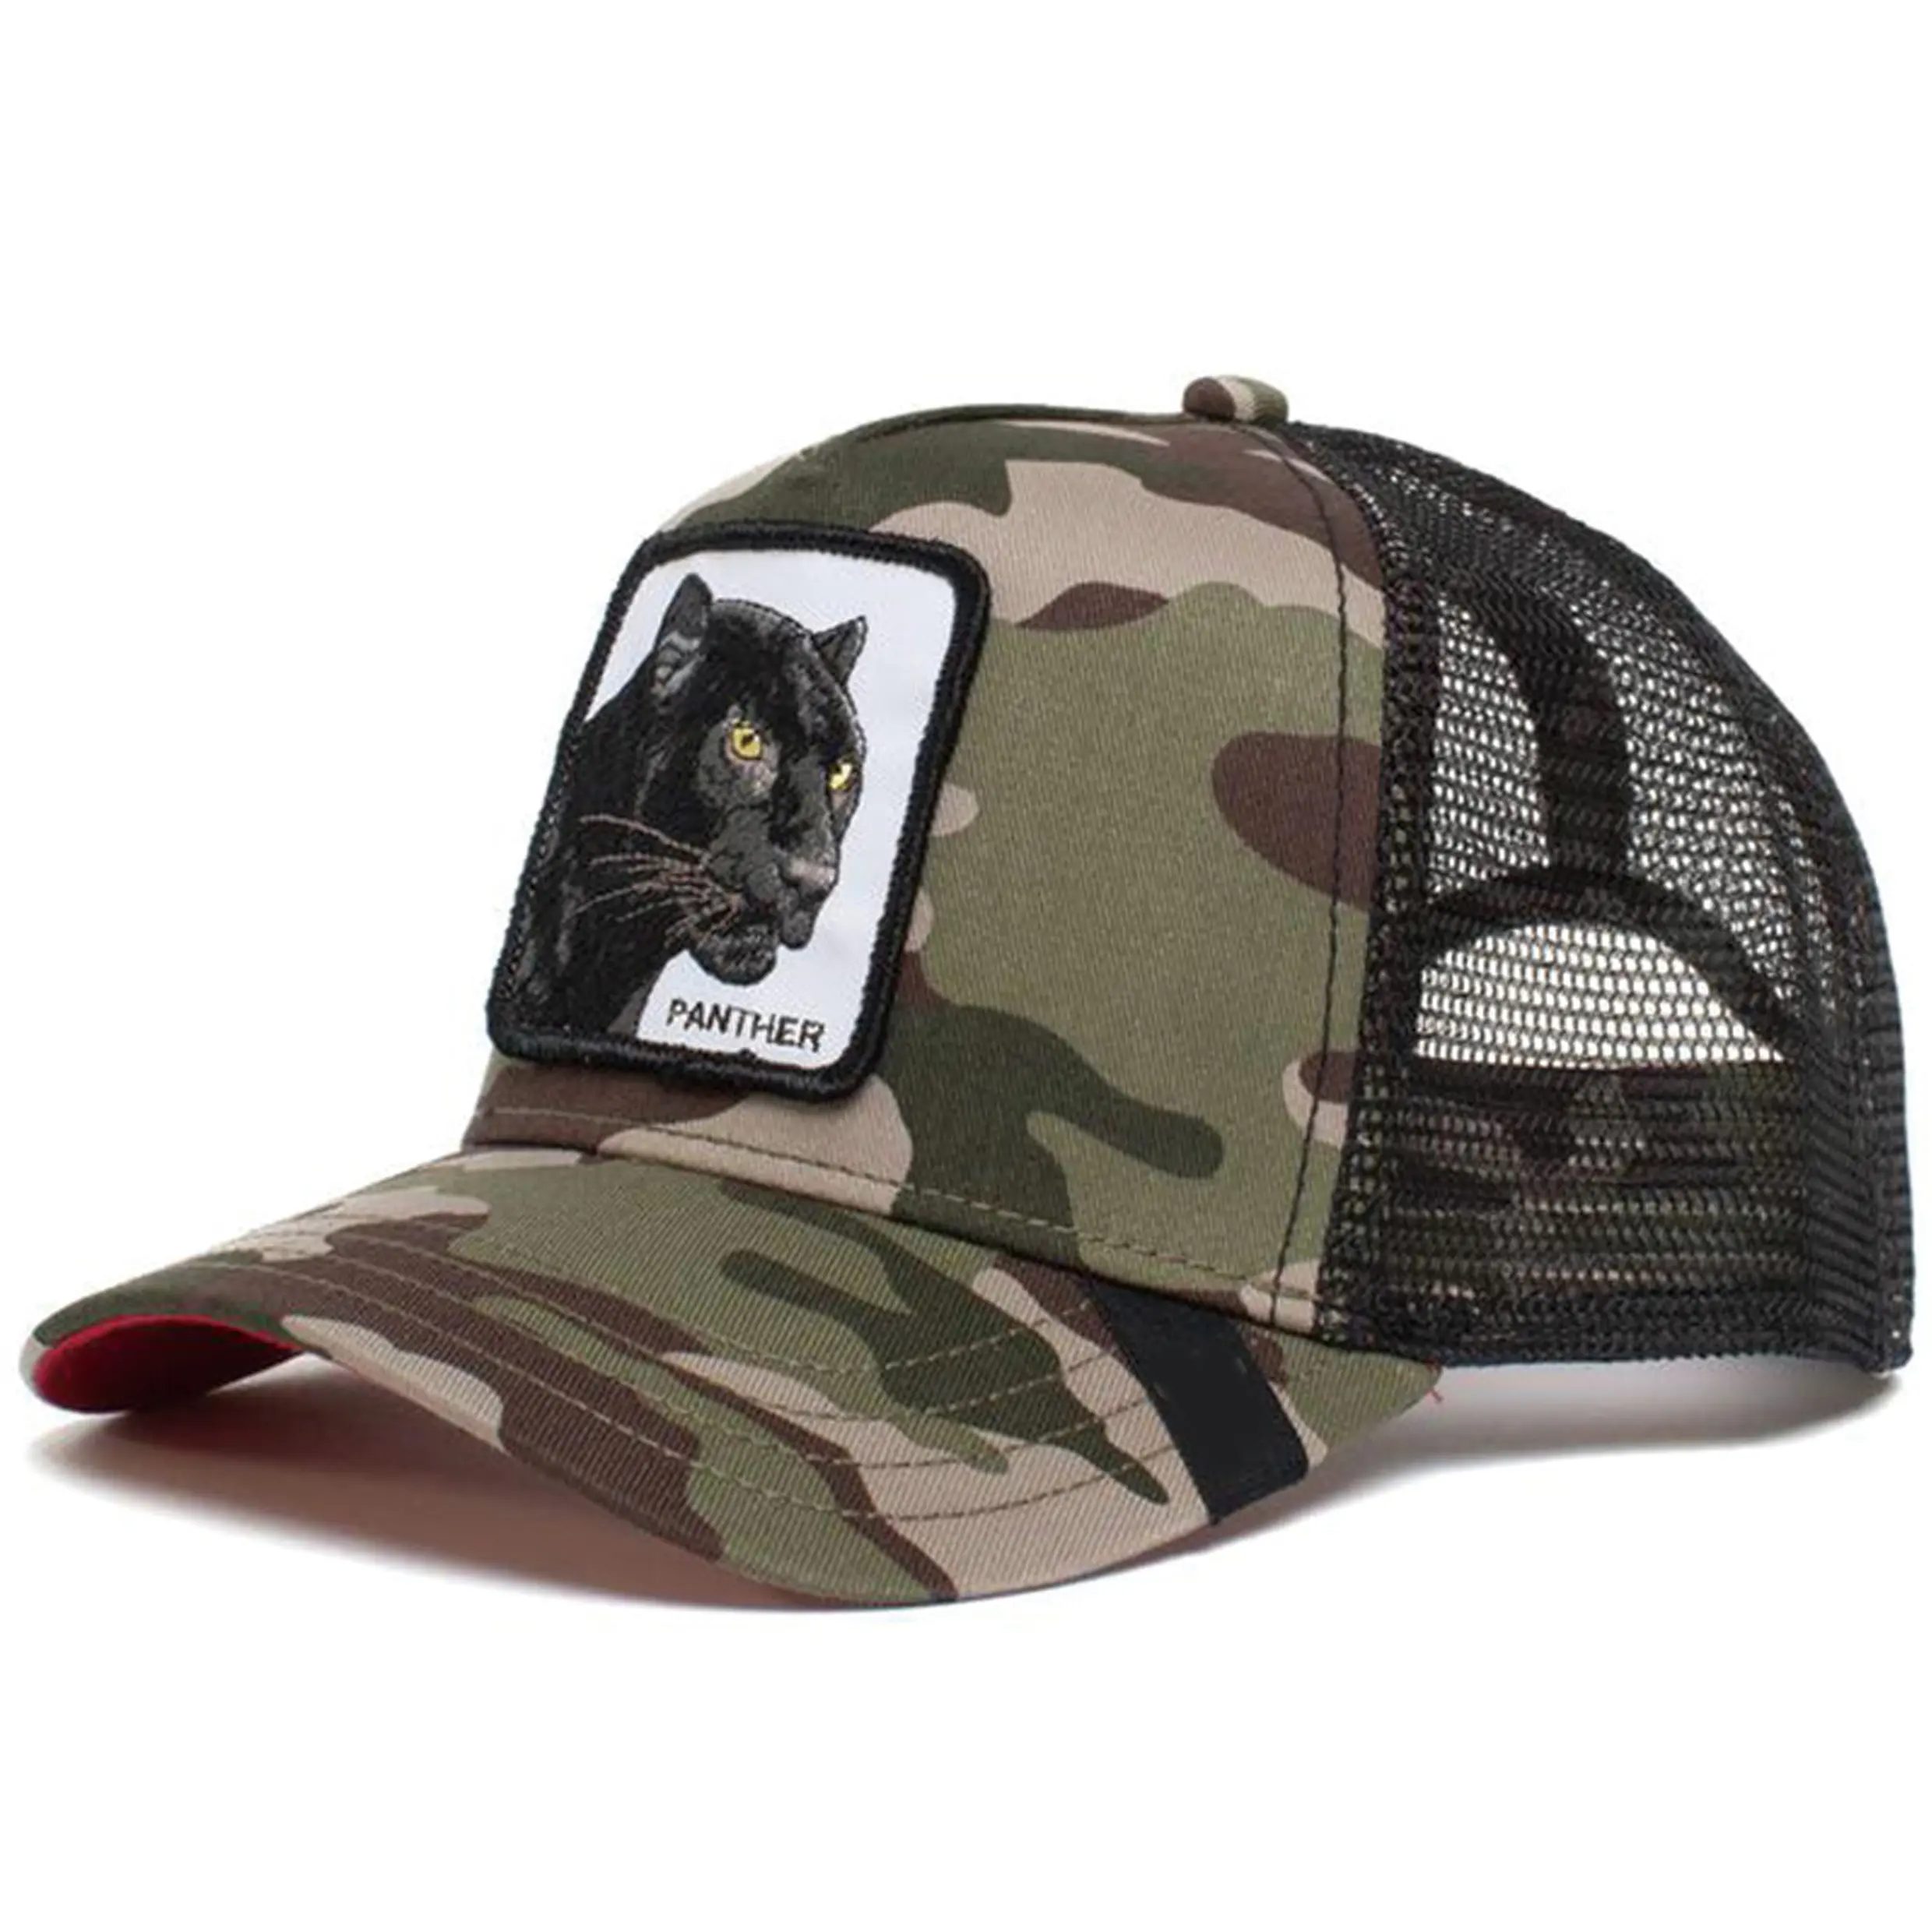 Moda recién llegados Gorras bordado Animal parche gorra de béisbol con sombrero de malla logotipo personalizado gorra de camionero gorras